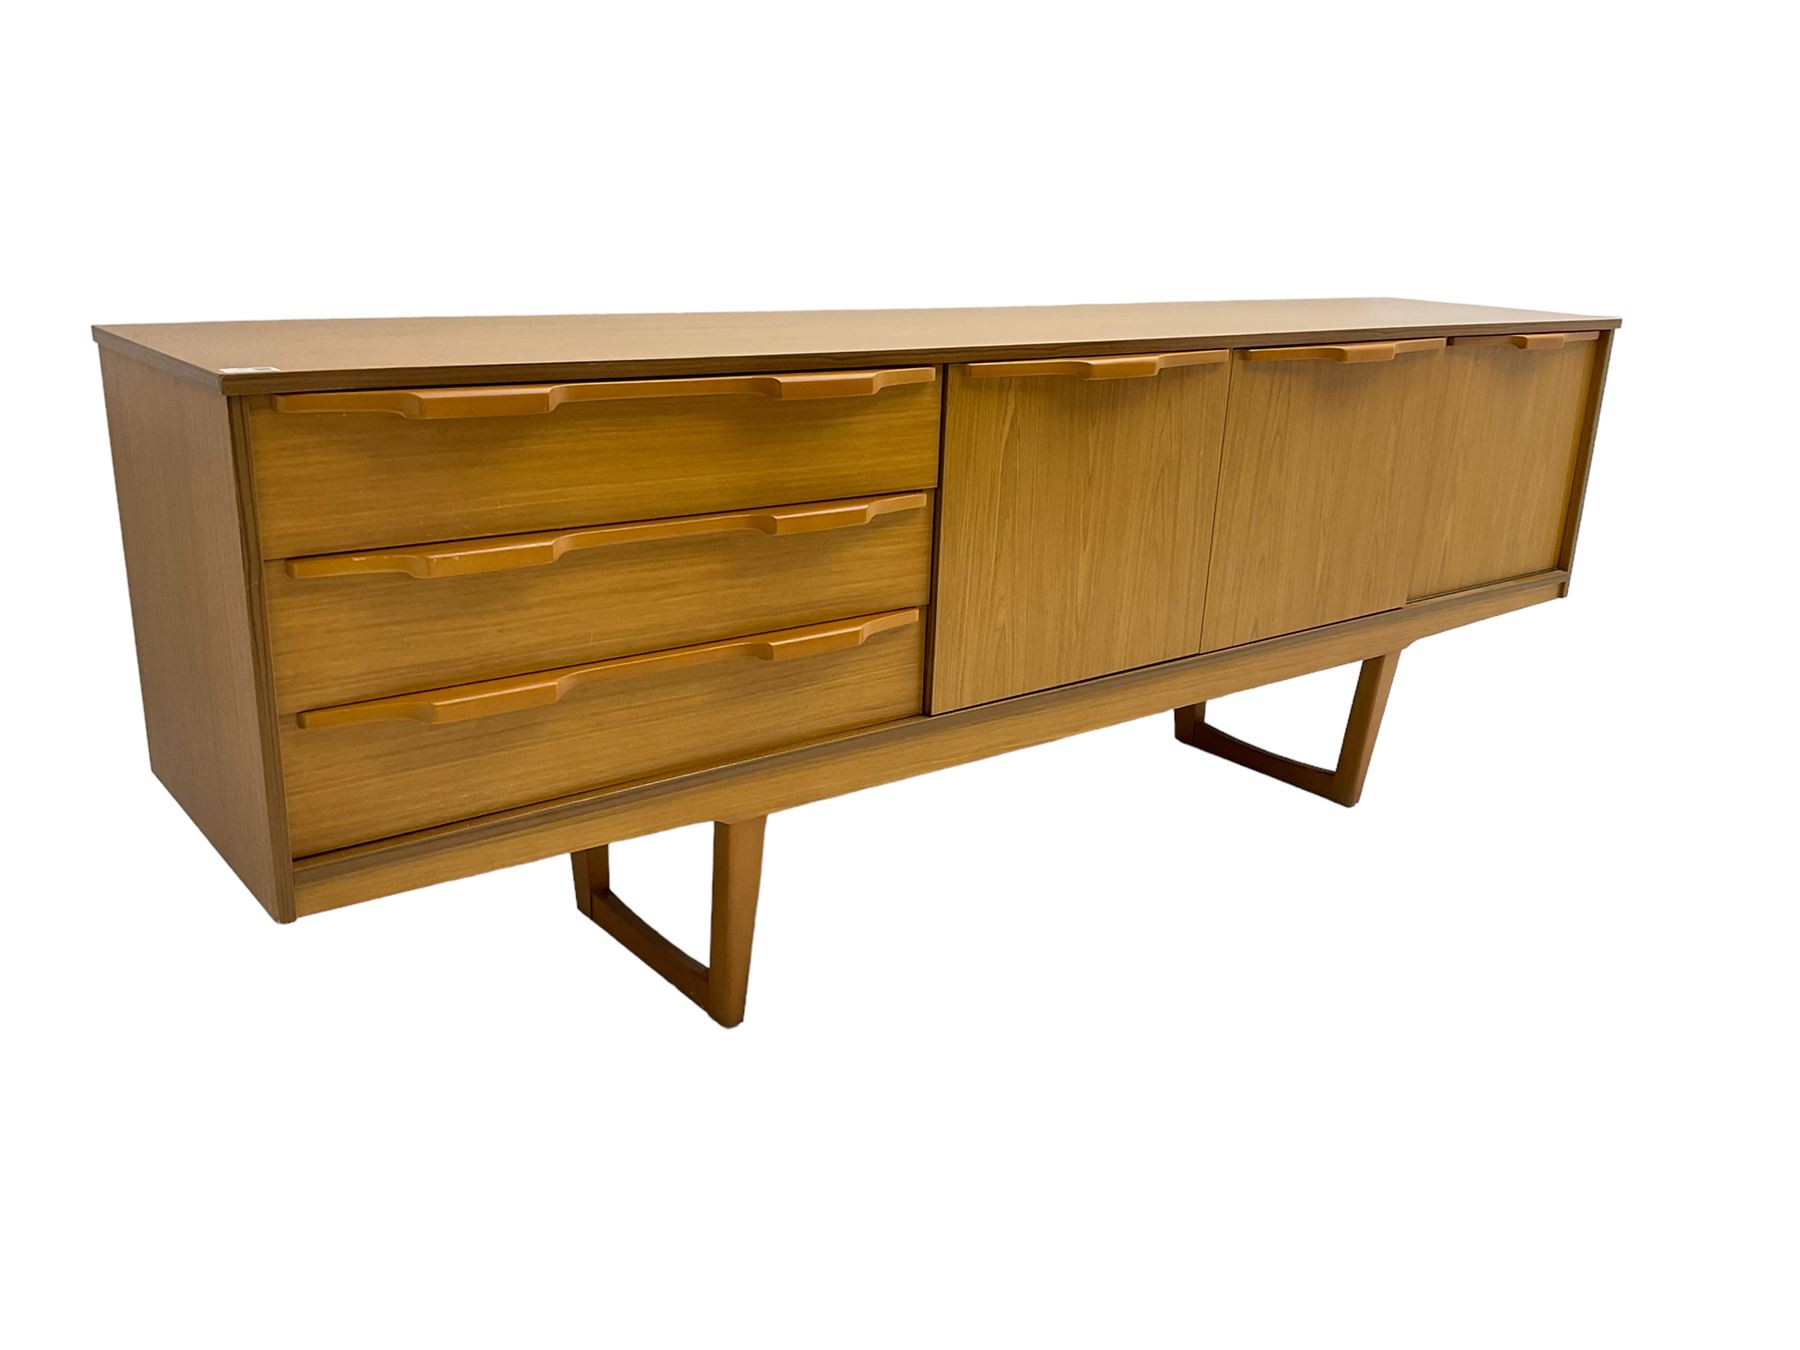 Stonehill Furniture (SF) Ltd - mid-20th century teak sideboard - Image 7 of 7